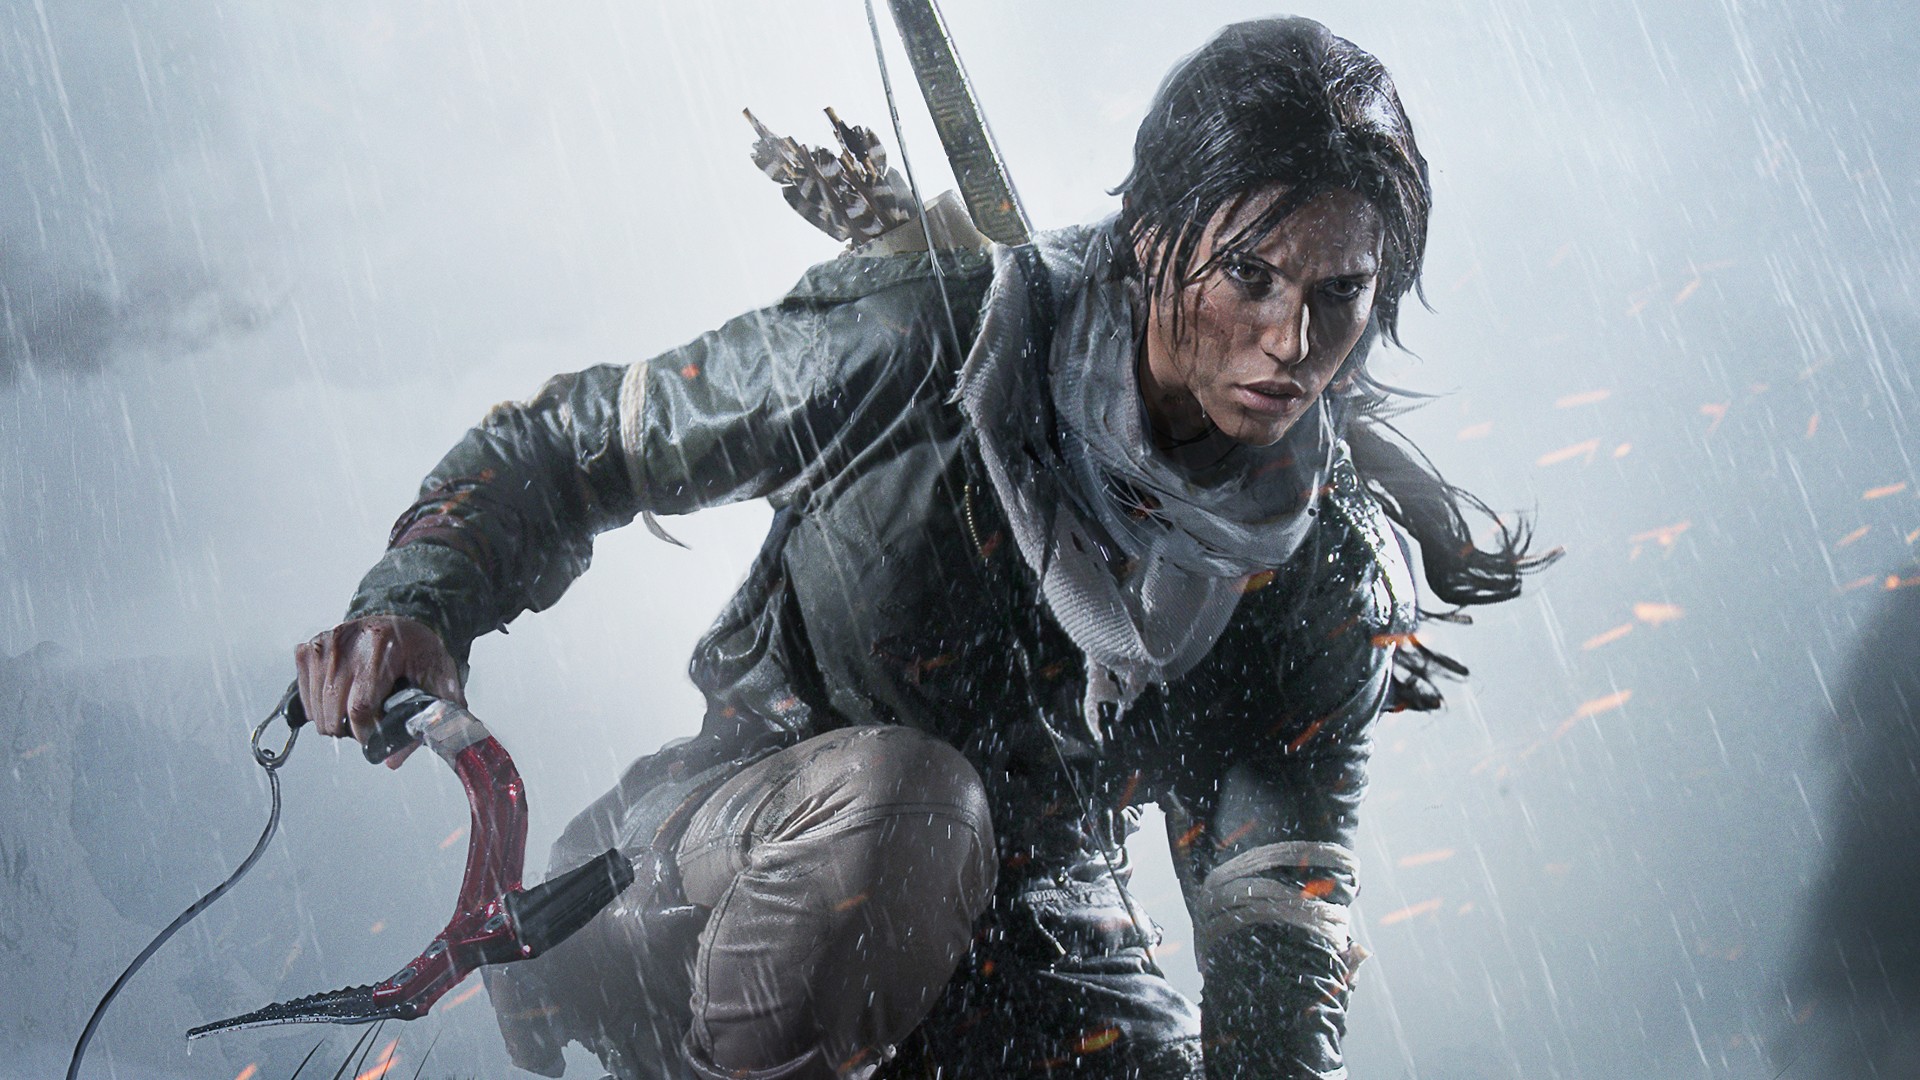 Série de Tomb Raider é confirmada pela Amazon Prime Video!